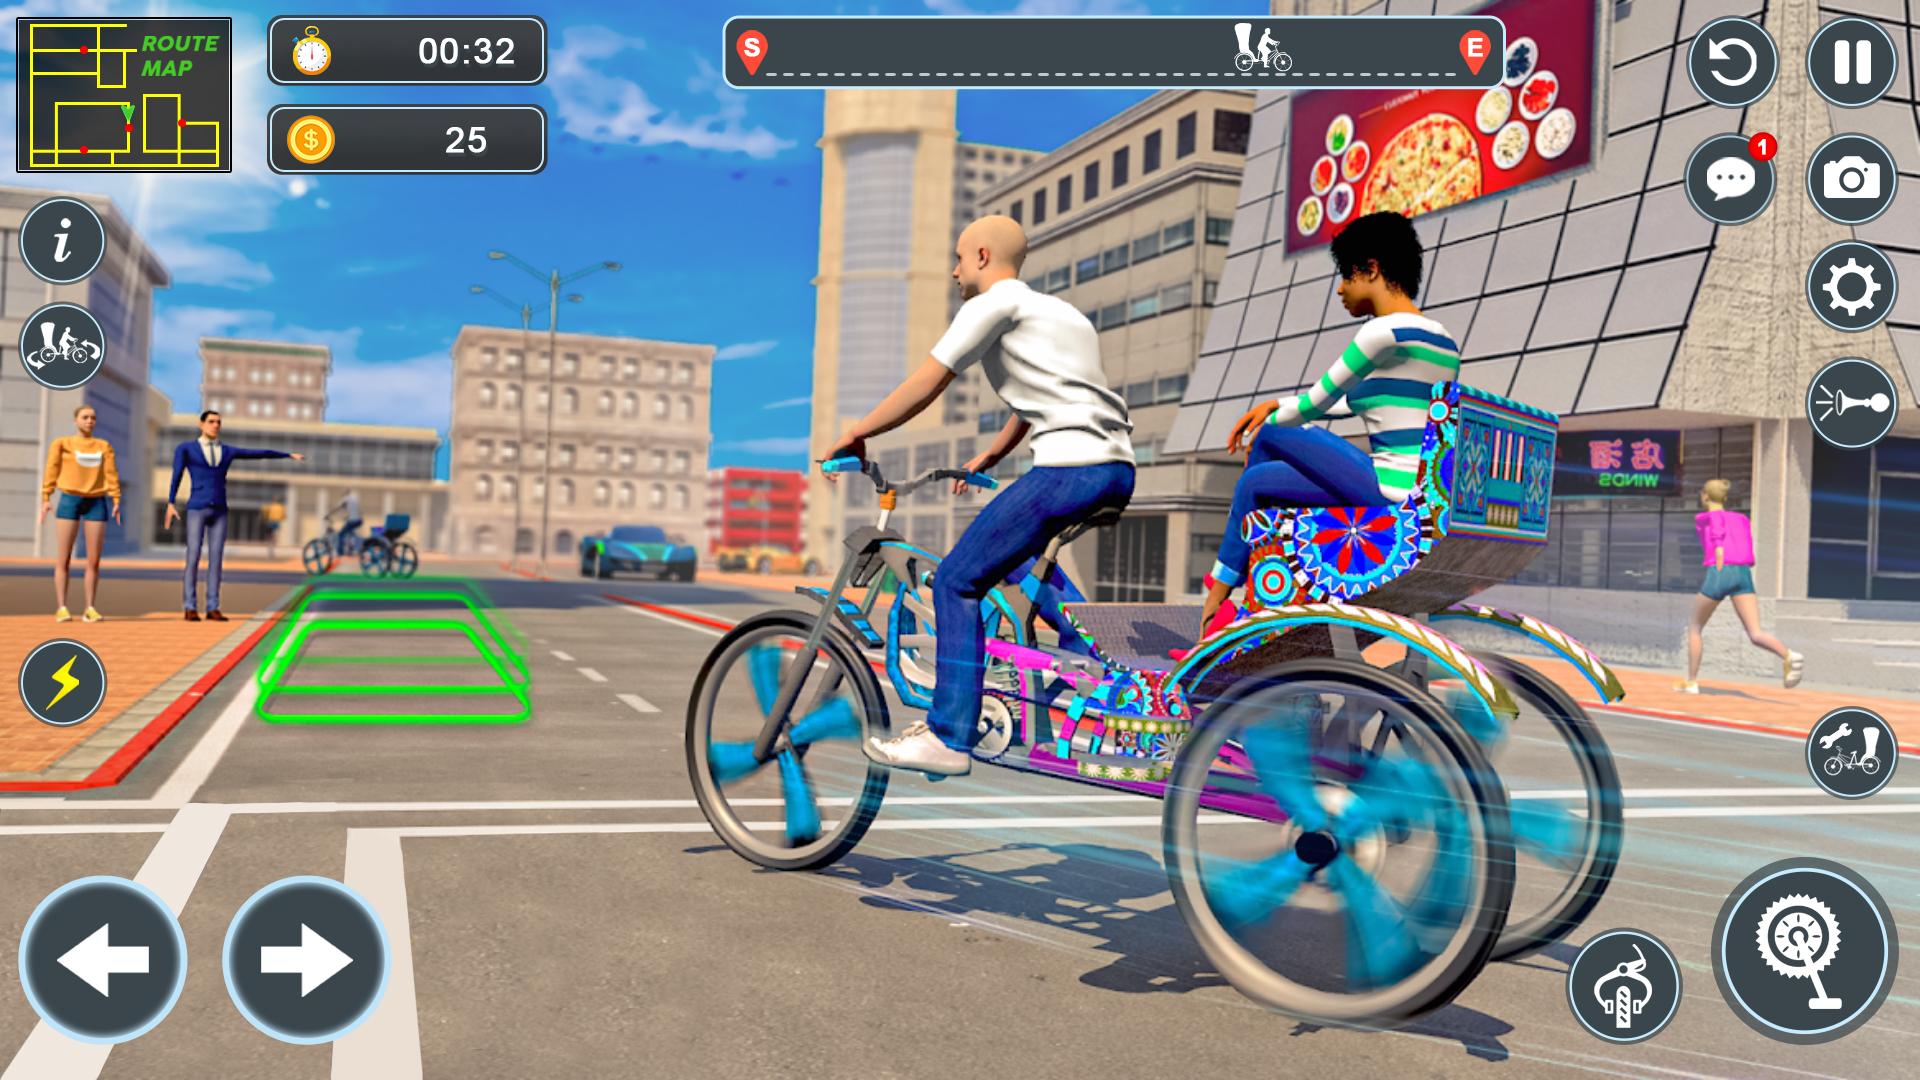 Игра велосипед. New Cycle игра. Игра про велосипед Microsoft. Jan Klabbers game Cycle.